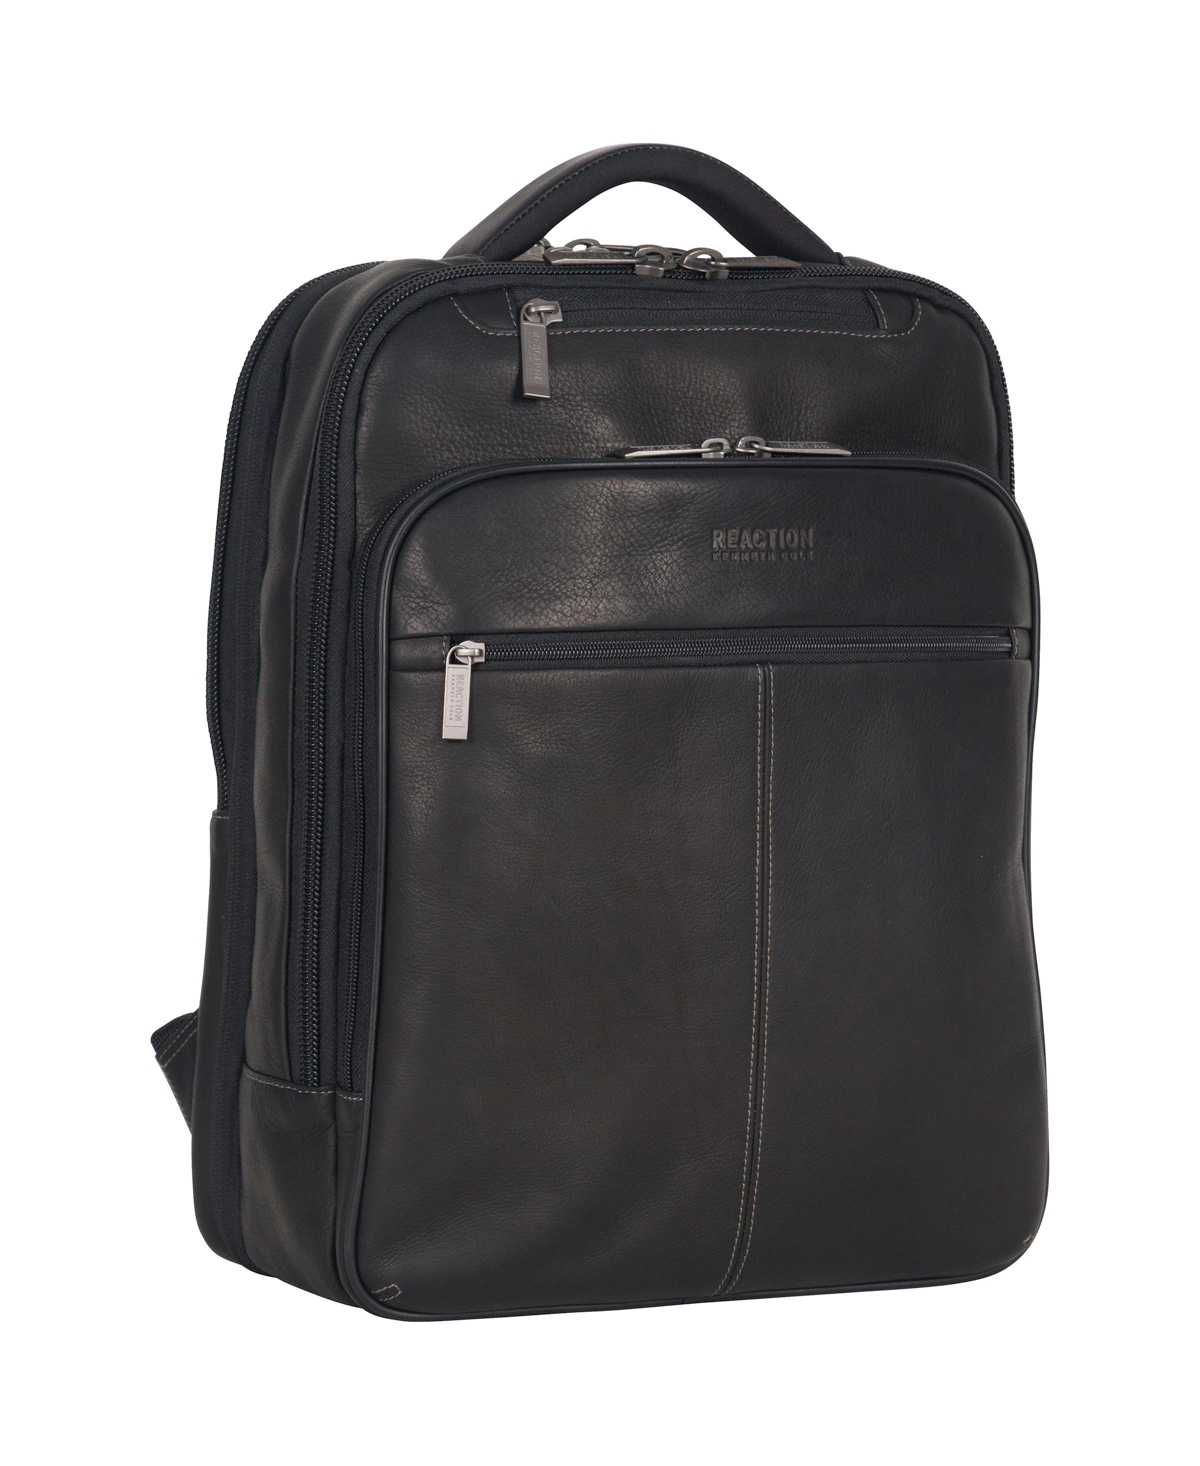 Full-Grain Colombian Leather 16" Laptop Tablet Travel Backpack - Cognac